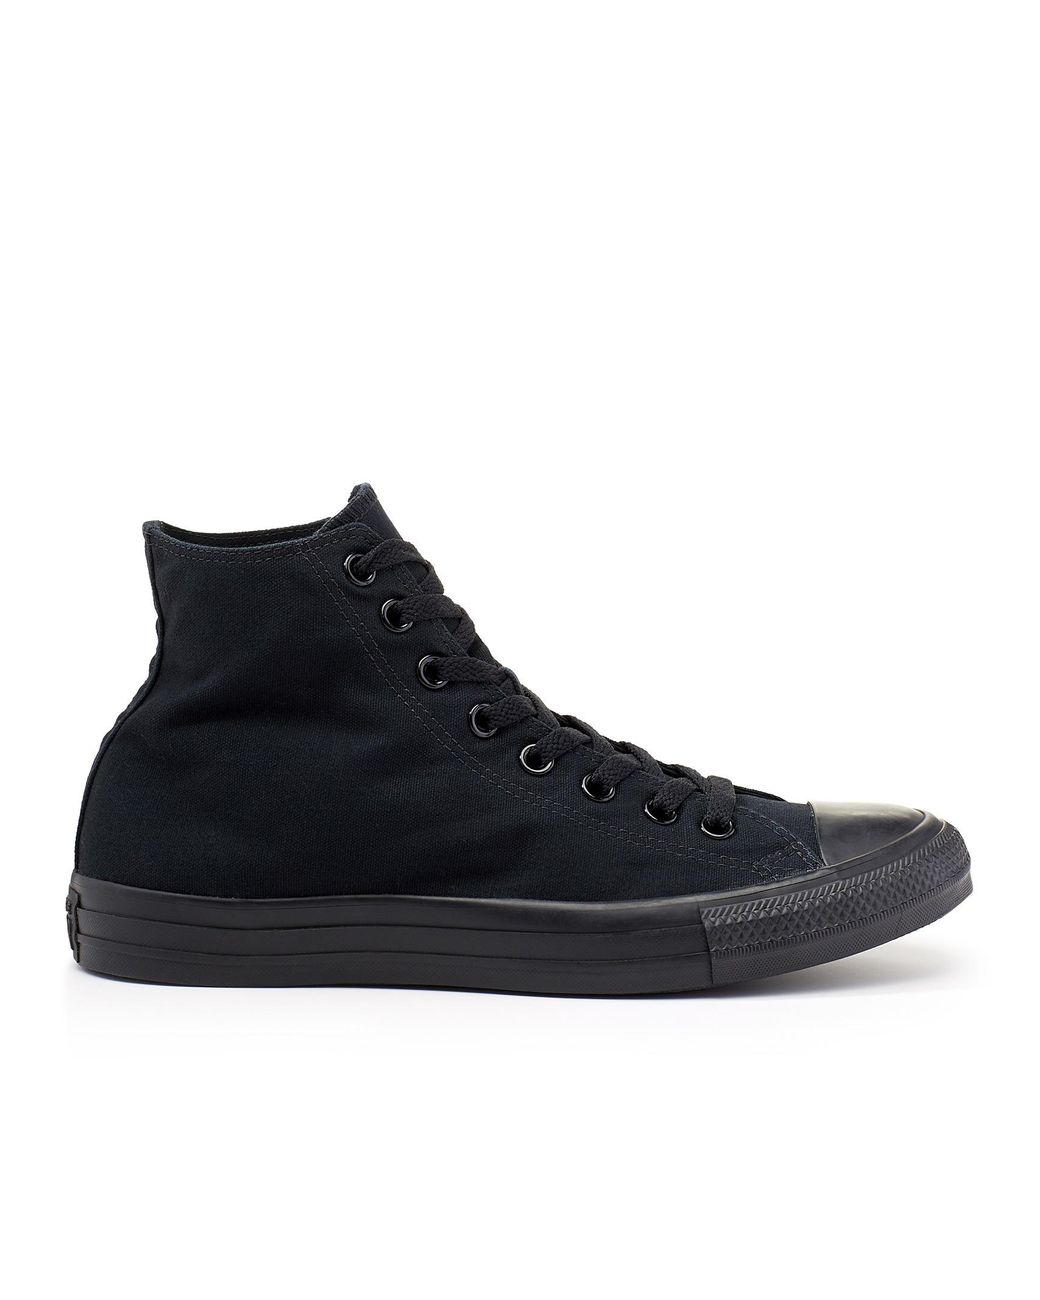 Converse Canvas Black Monochrome Chuck 70 High Sneakers for Men - Save ...